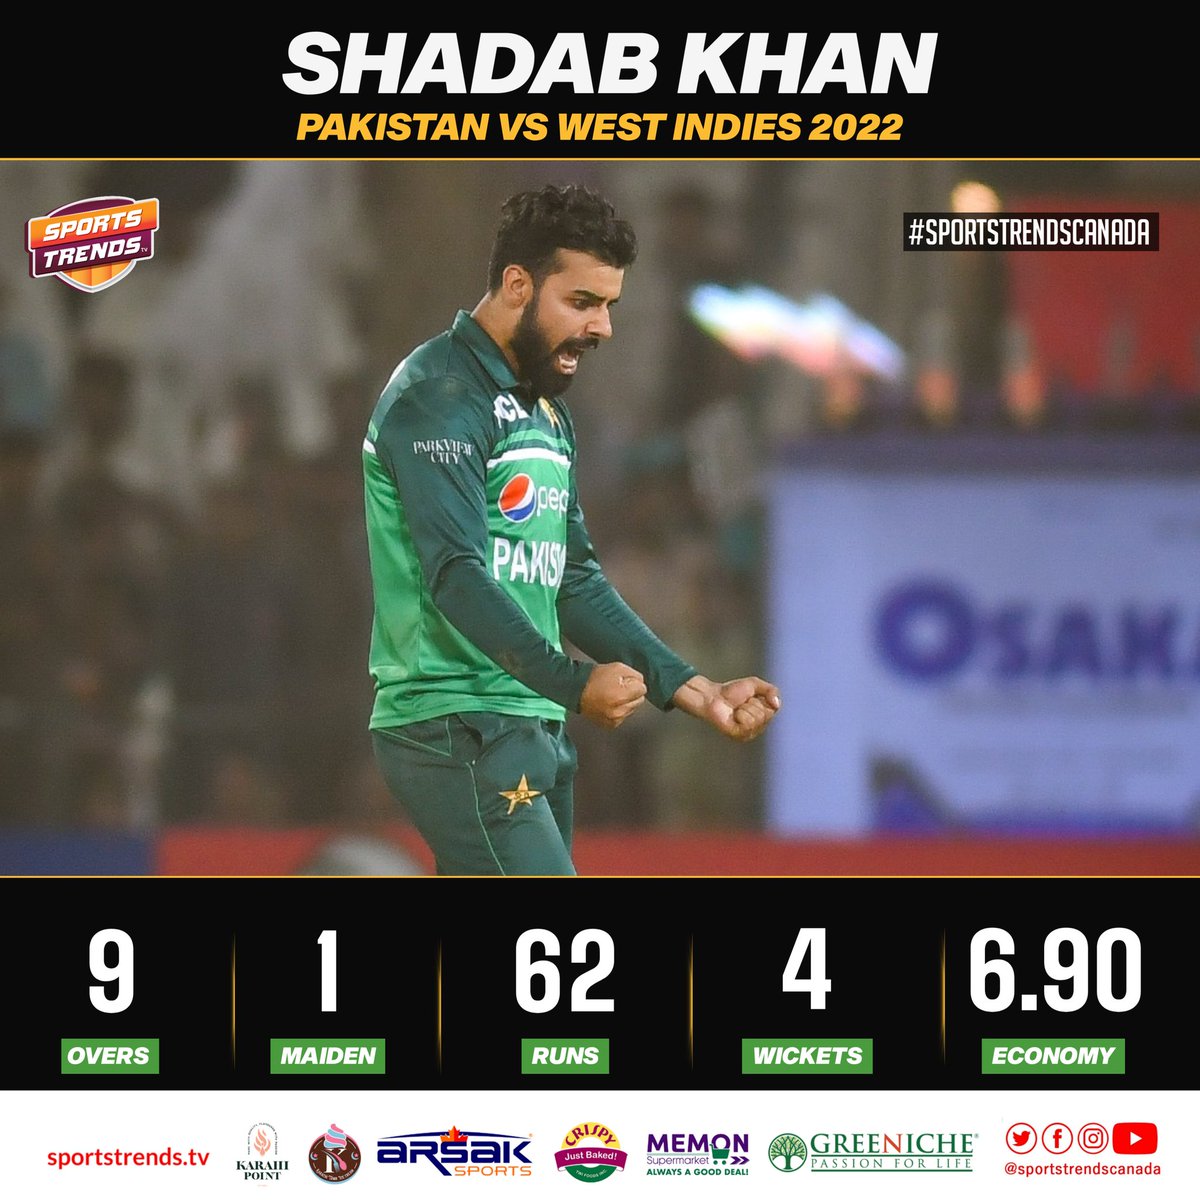 Impressive Bowling Figures For Shadab Khan Against West Indies 🔥

#Cricket #PAKvWI #WIvPAK #PAKvsWI #WIvsPAK #SportsTrendsCan #ShadabKhan #SportsTrendsCanada